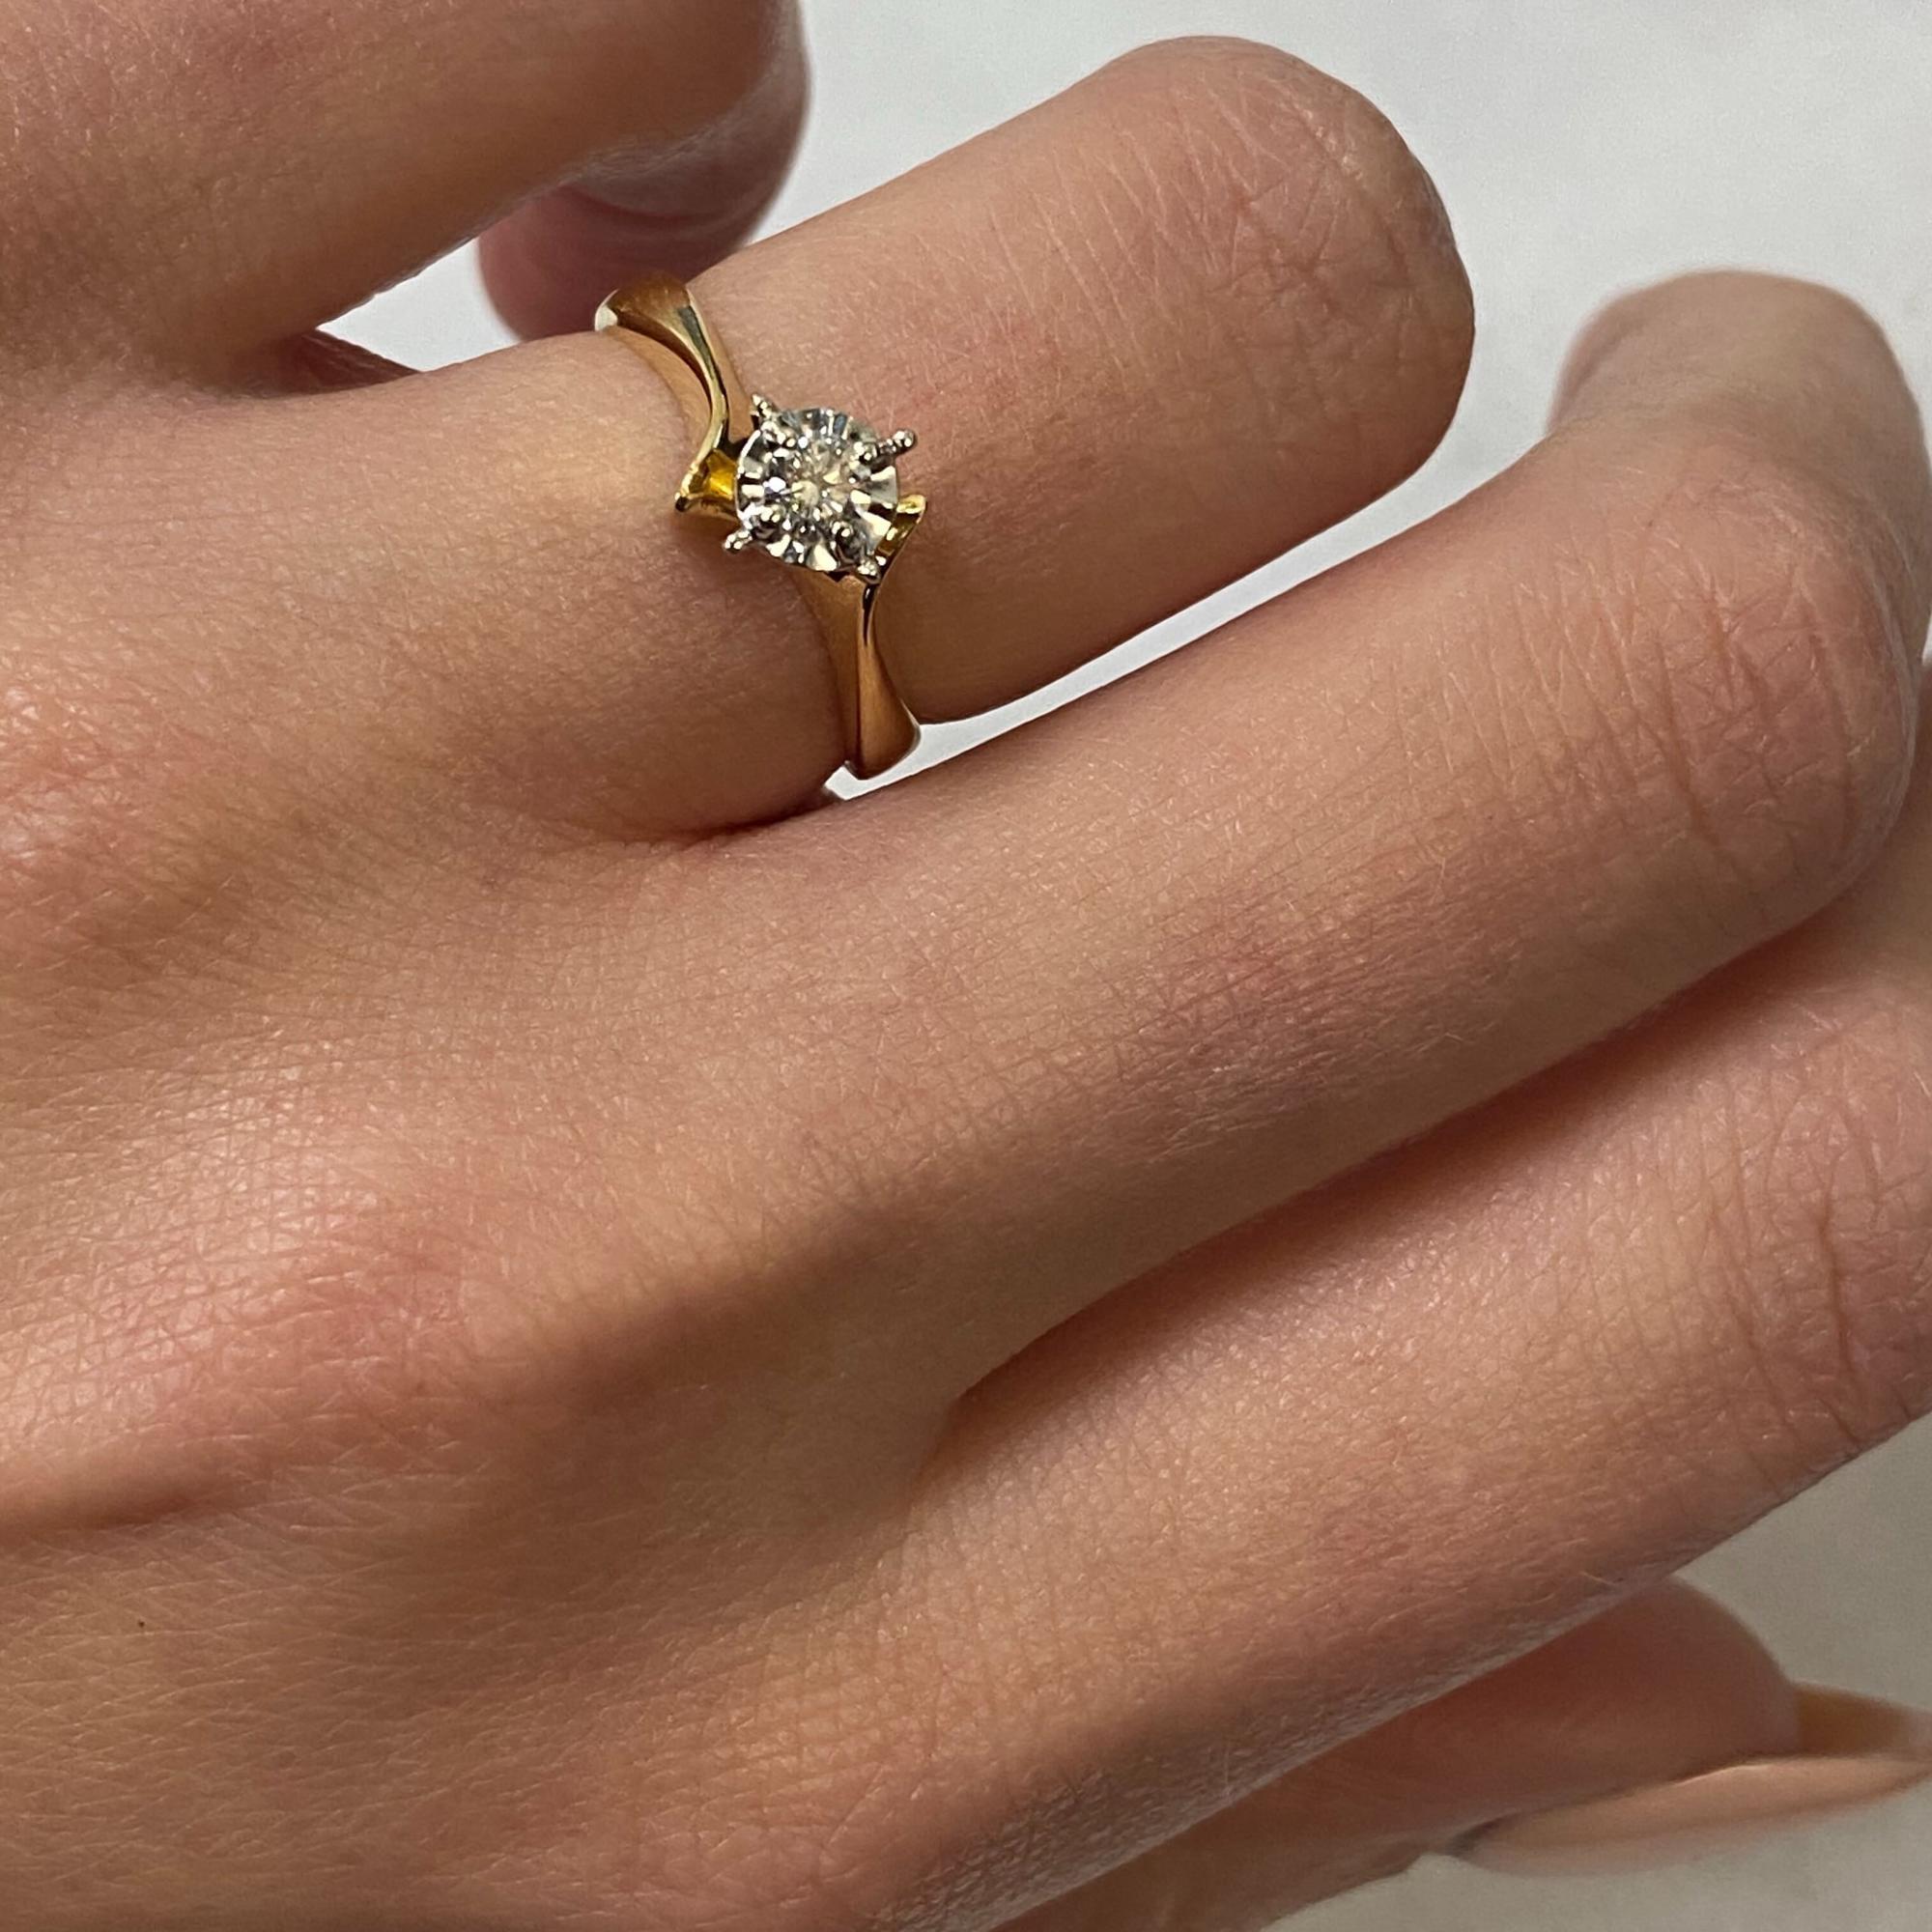 Rachel Koen Round Cut Small Diamond Engagement Ring 14K Yellow Gold 0.15cttw For Sale 2